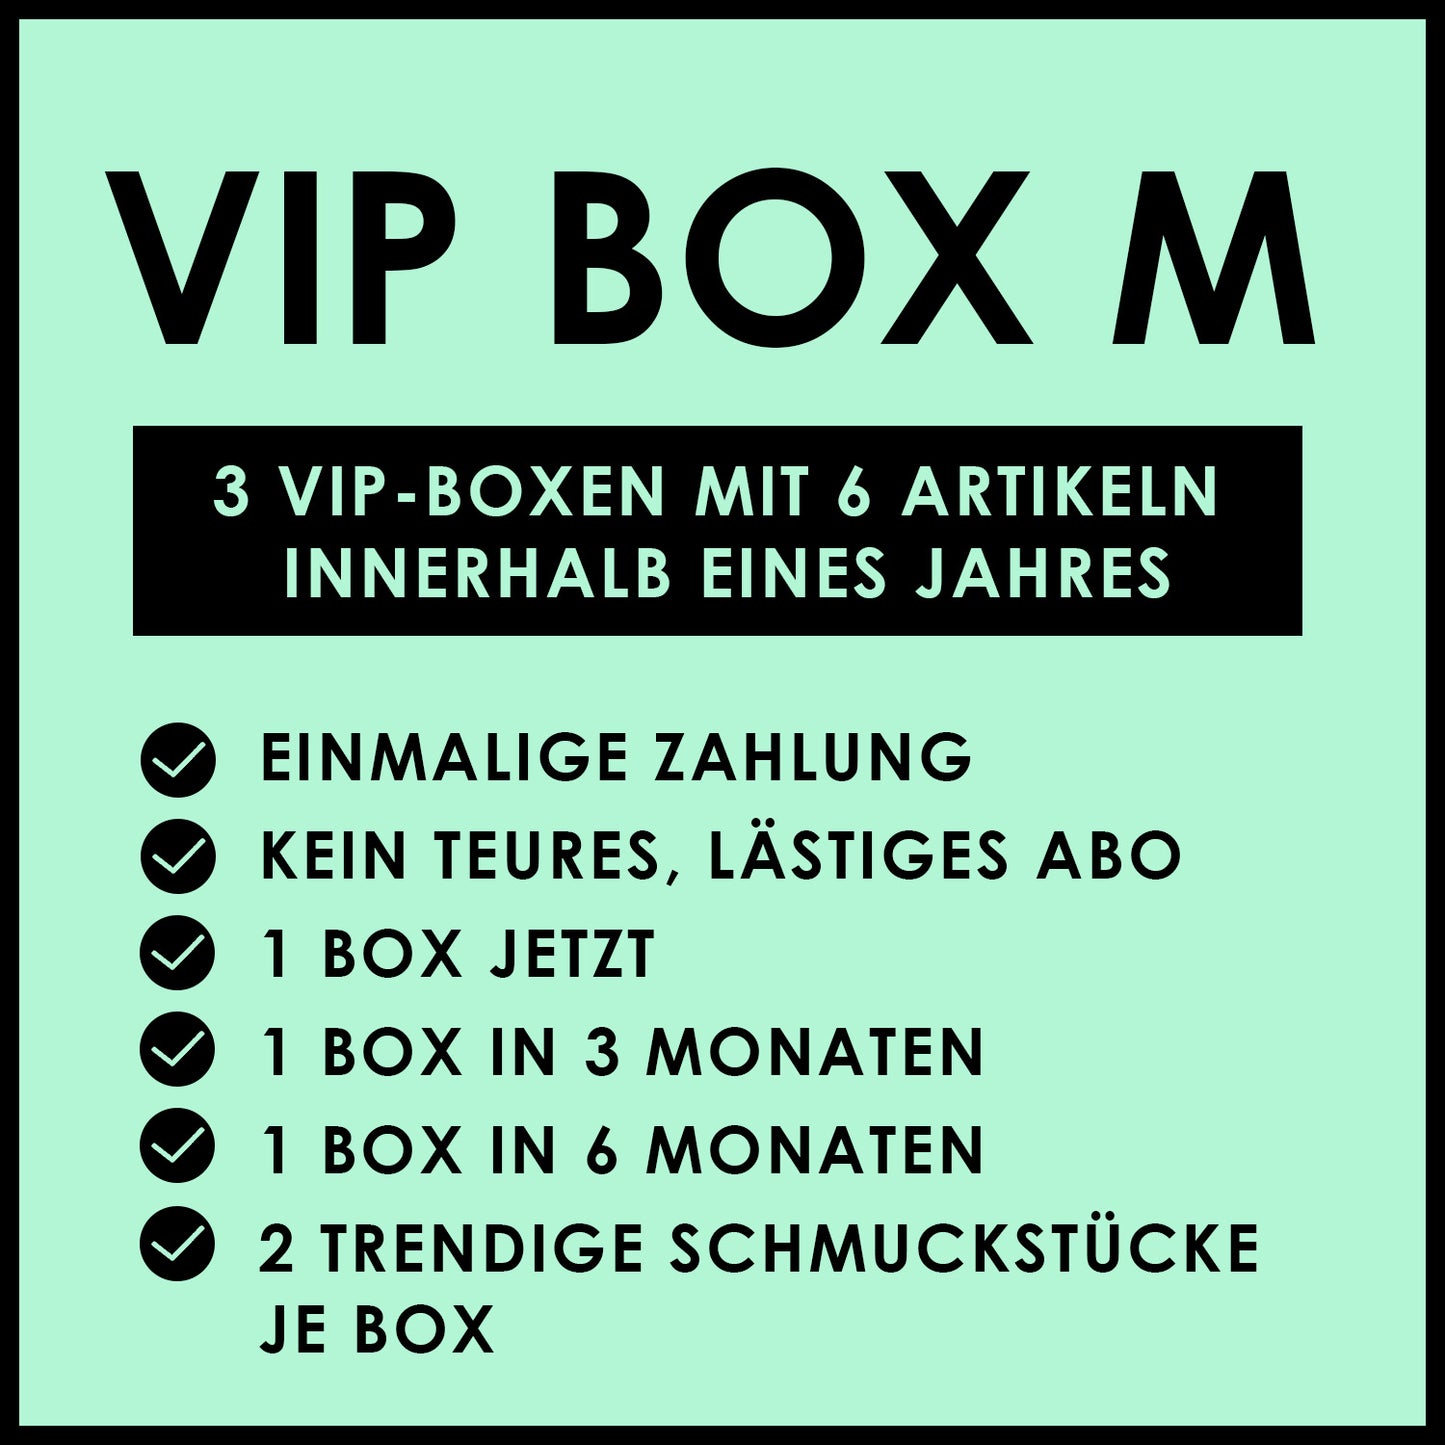 VIP BOX M MEN